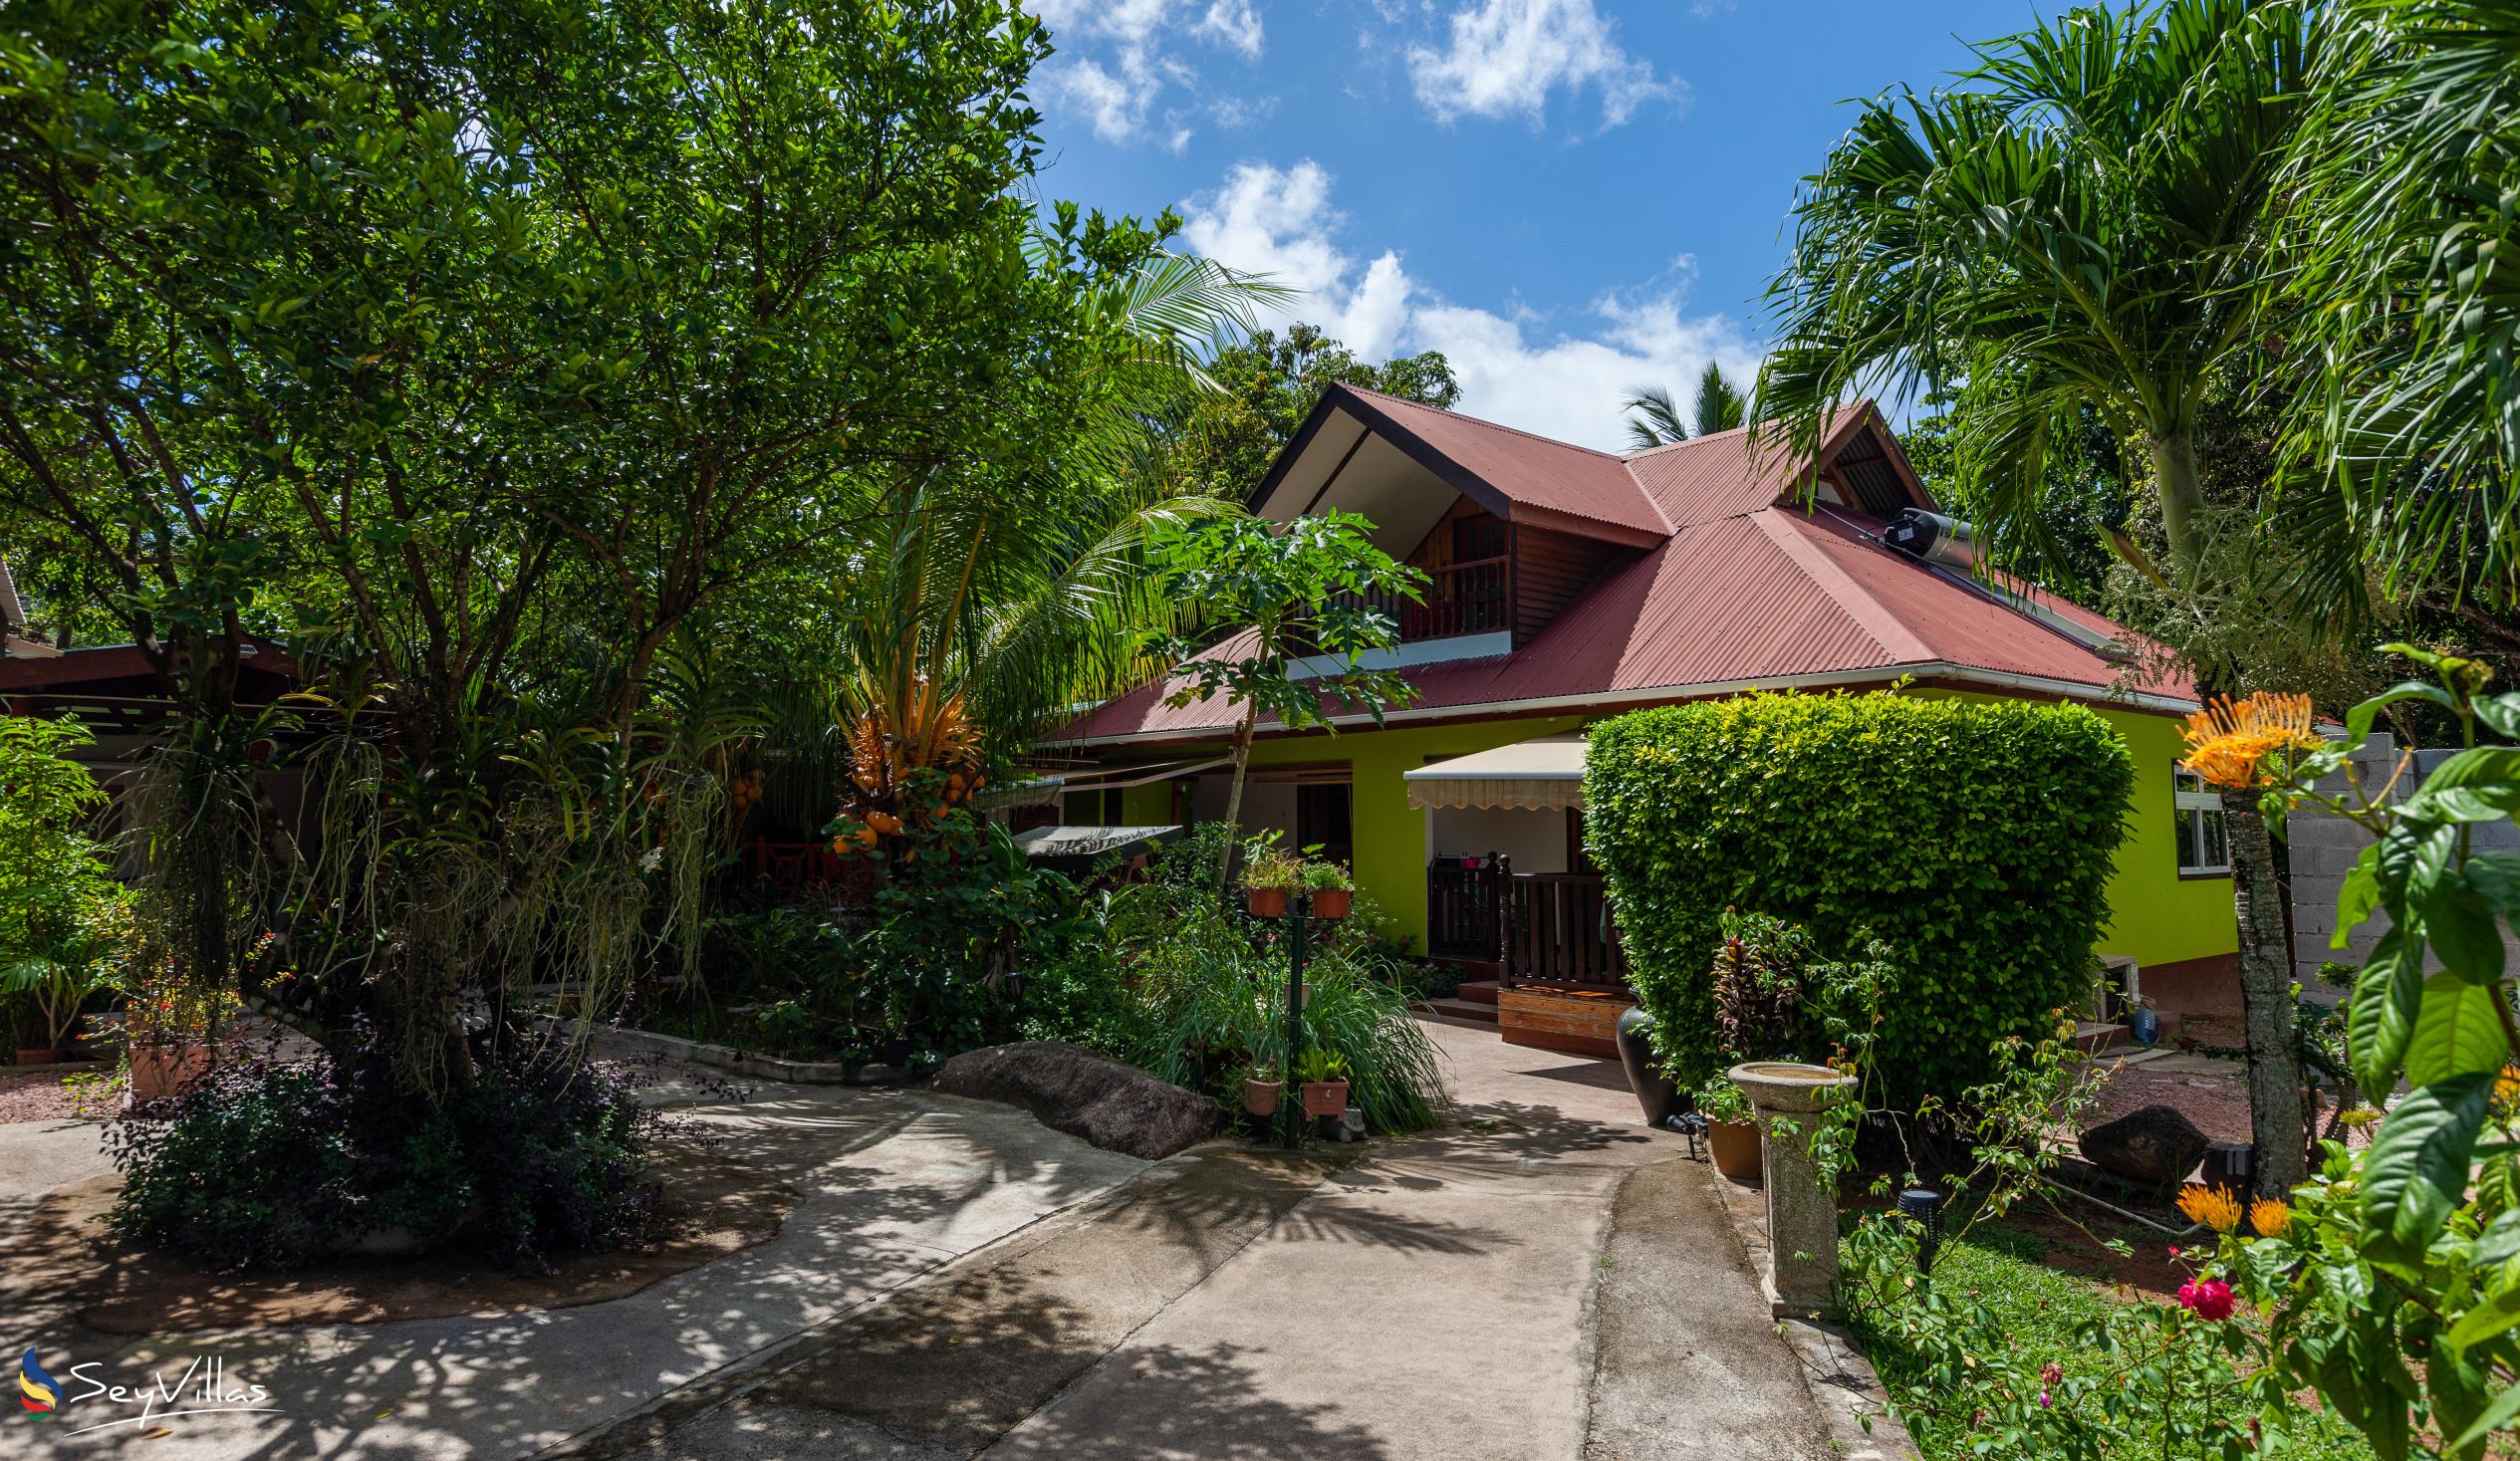 Foto 4: Chloe's Cottage - Aussenbereich - La Digue (Seychellen)